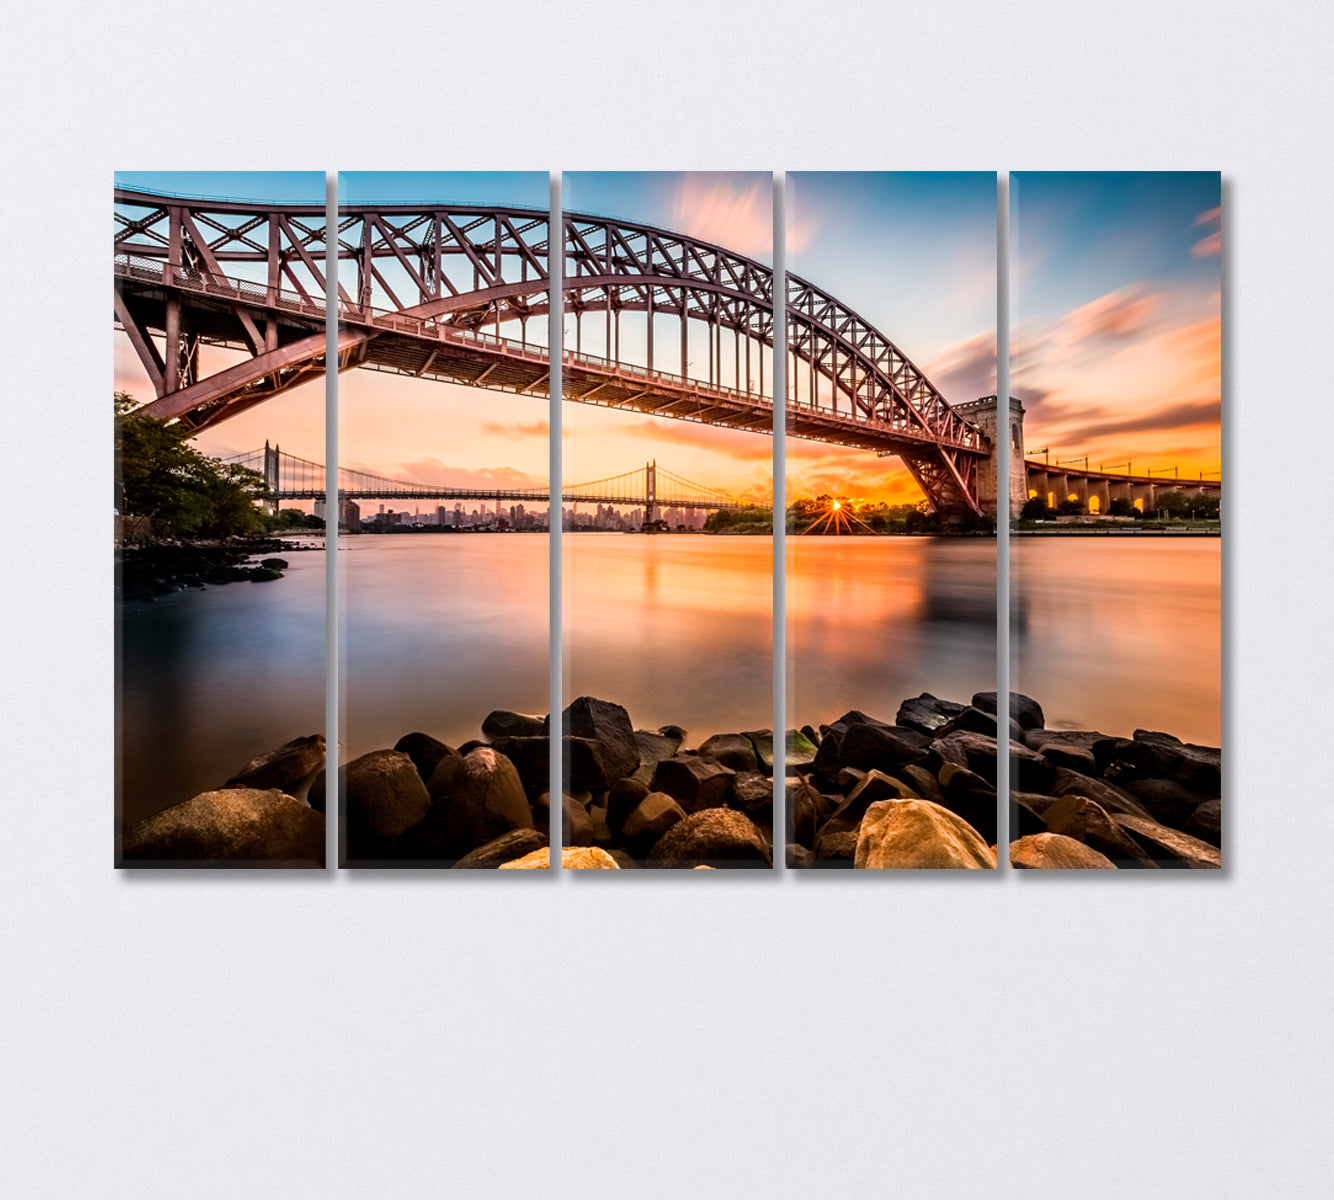 Triborough Bridge at Sunset New York Canvas Print-Canvas Print-CetArt-5 Panels-36x24 inches-CetArt